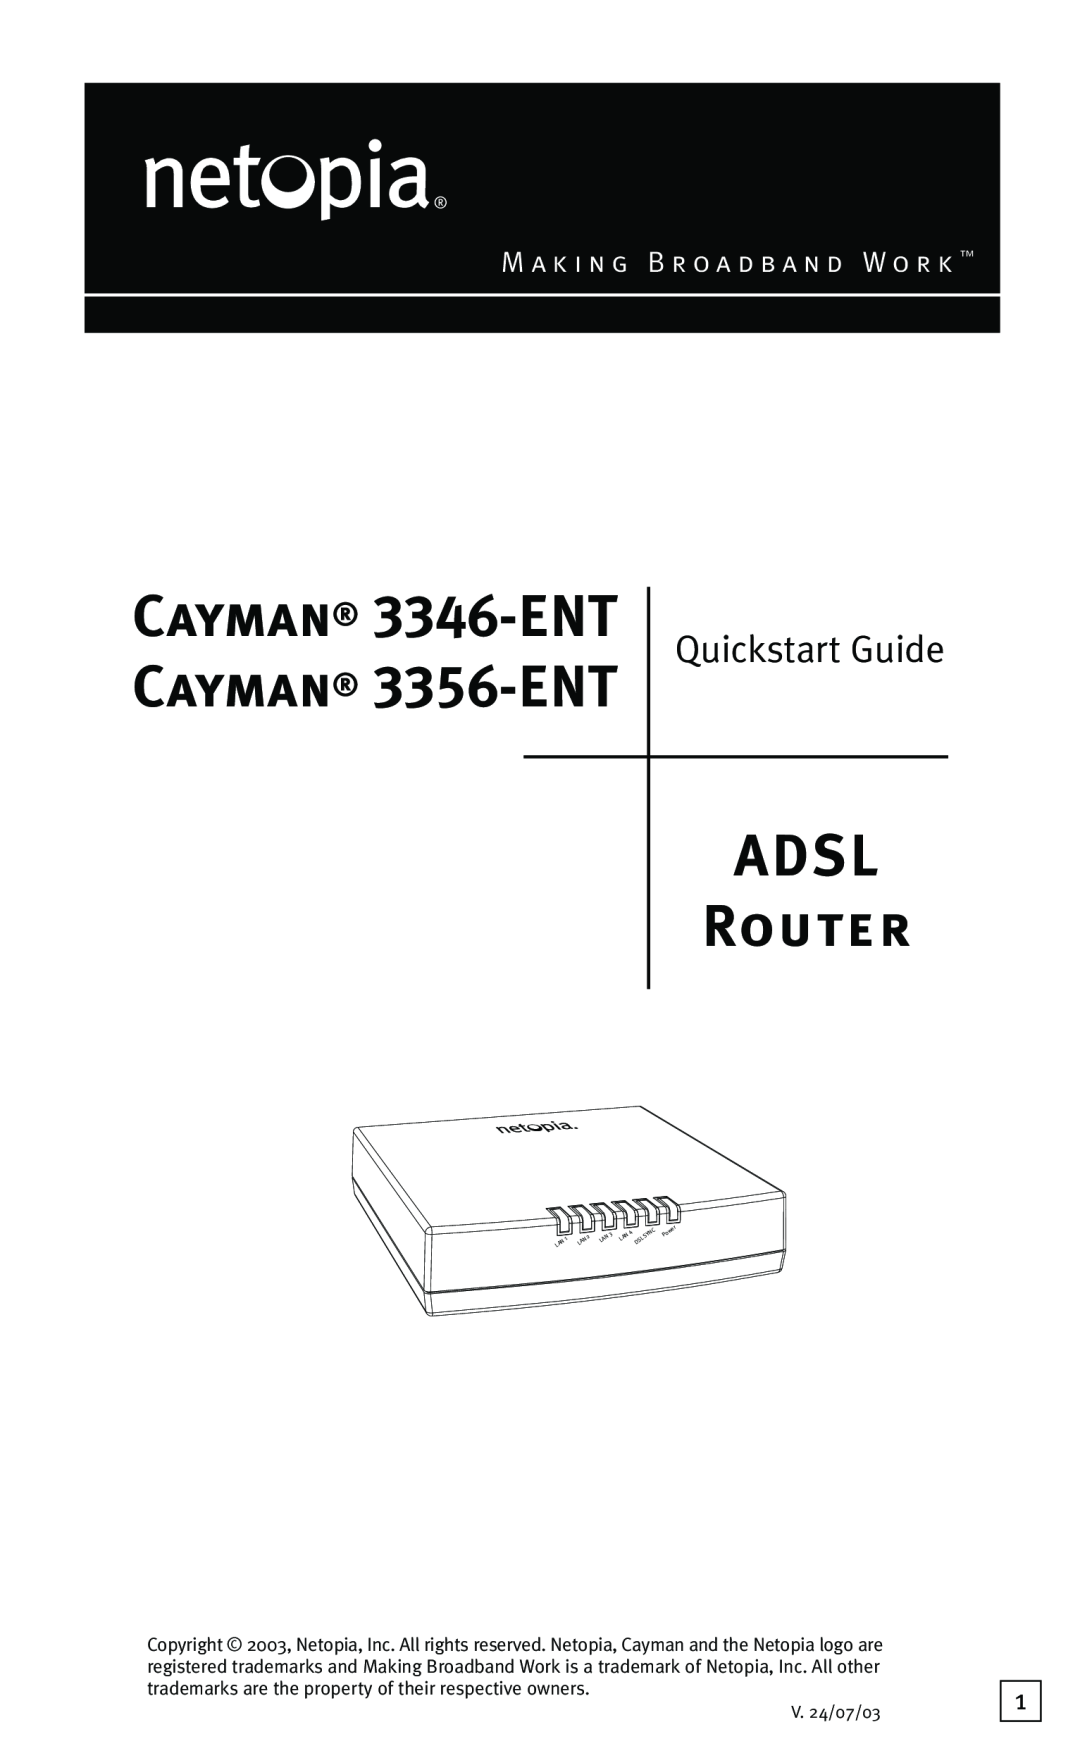 Netopia quick start Cayman 3356-ENT ADSL Router, Cayman 3346-ENT Quickstart Guide, V. 24/07/03, Power 